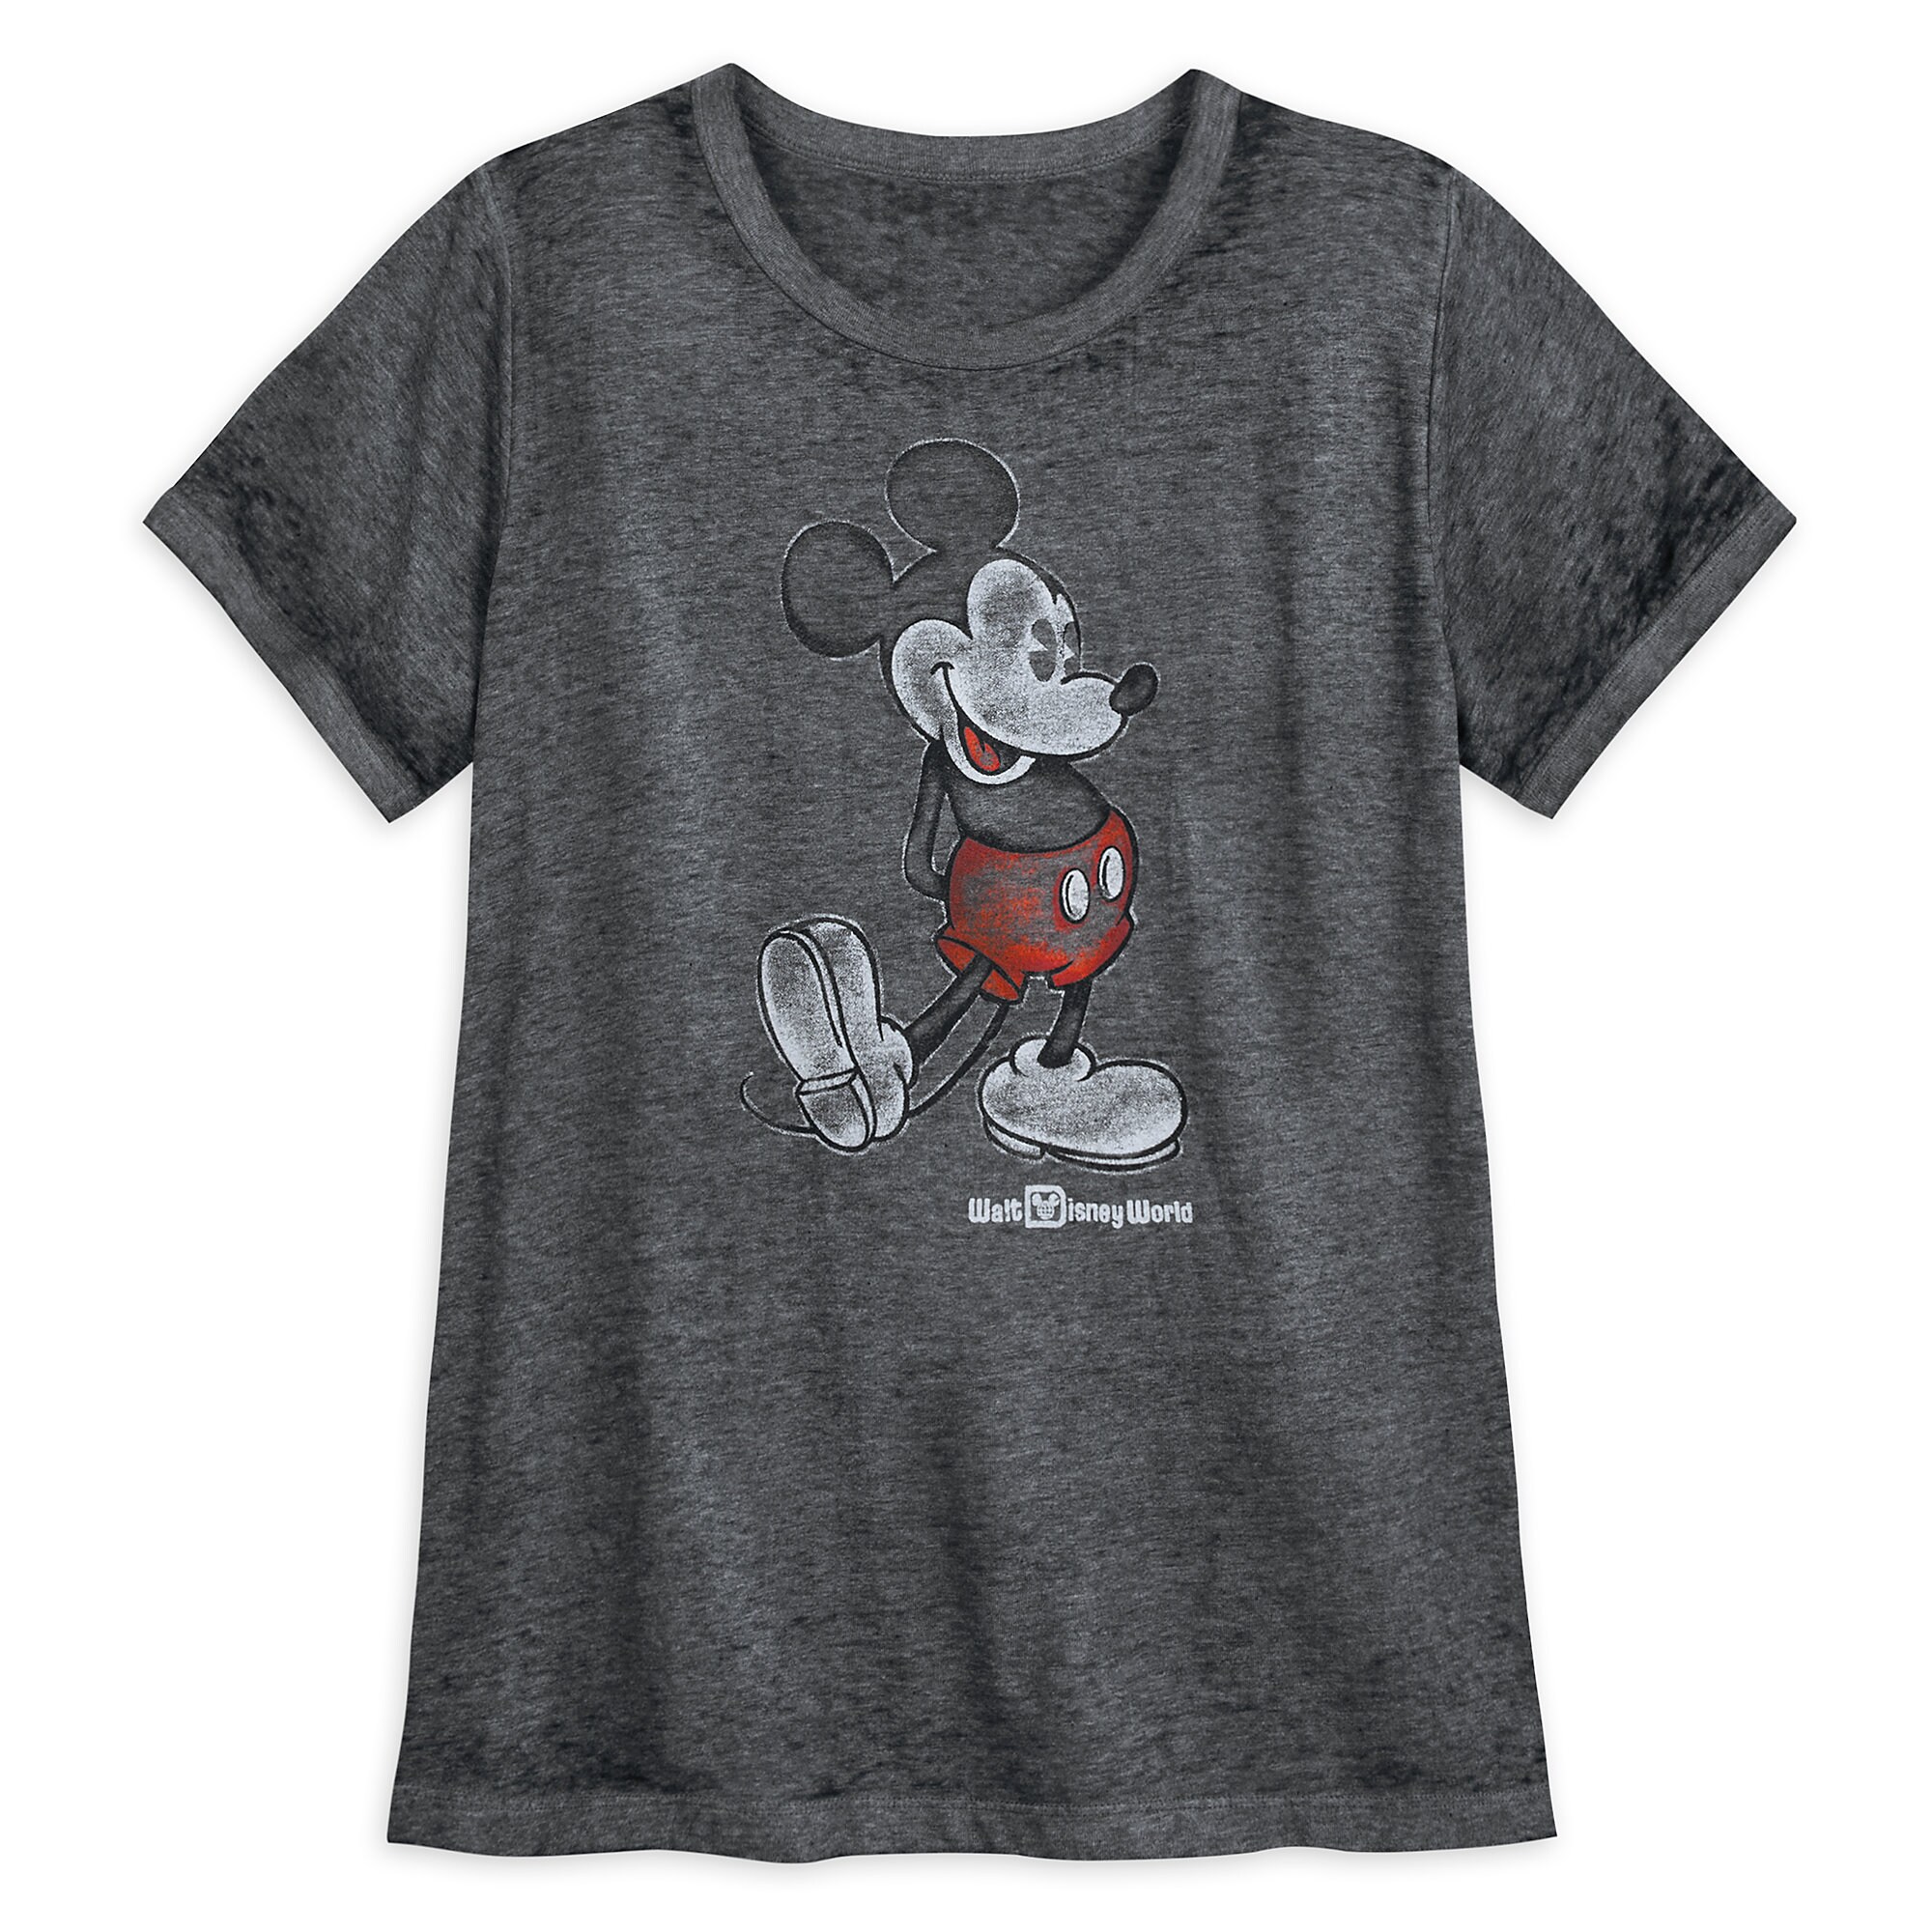 Mickey Mouse Heathered Ringer T-Shirt for Women - Walt Disney World - Black